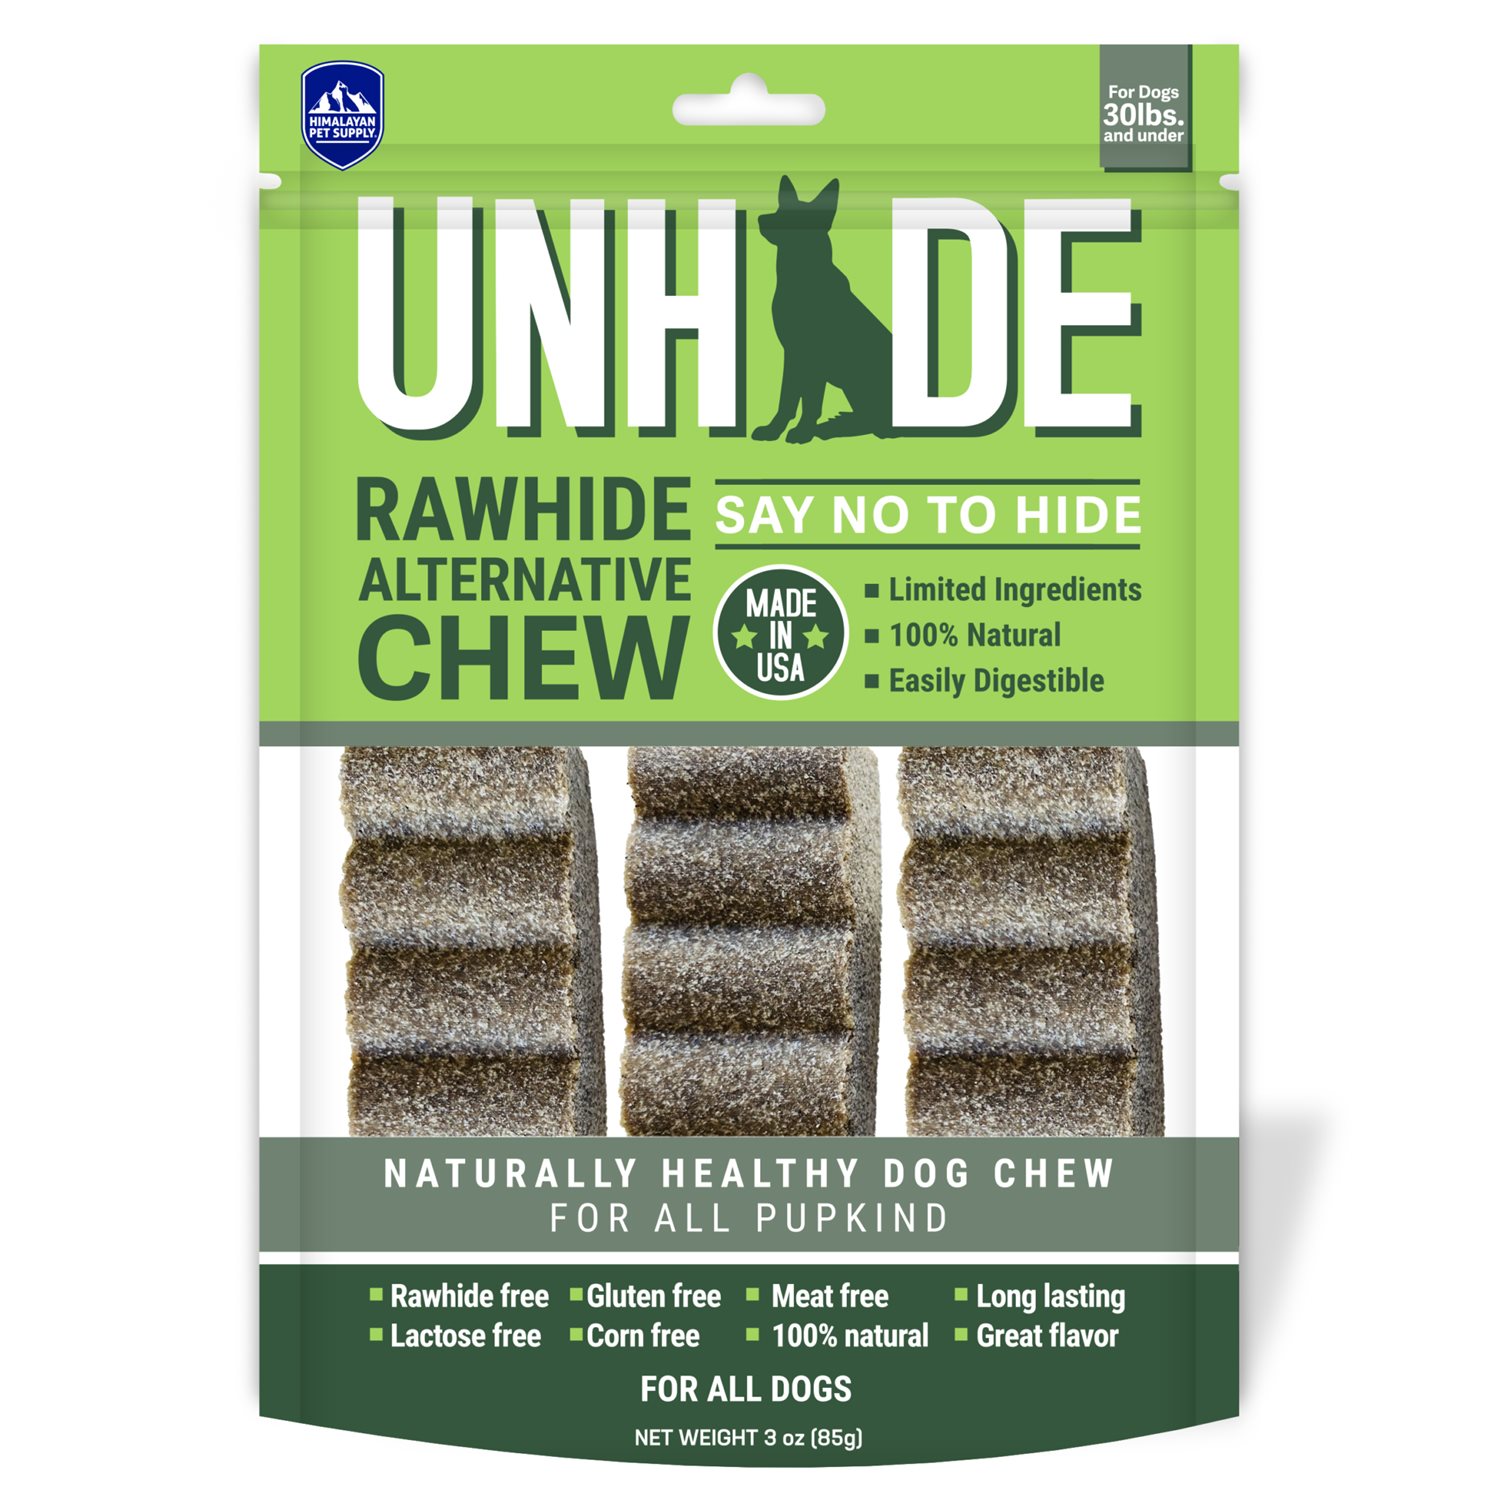 UnHide Rawhide-Free Chew